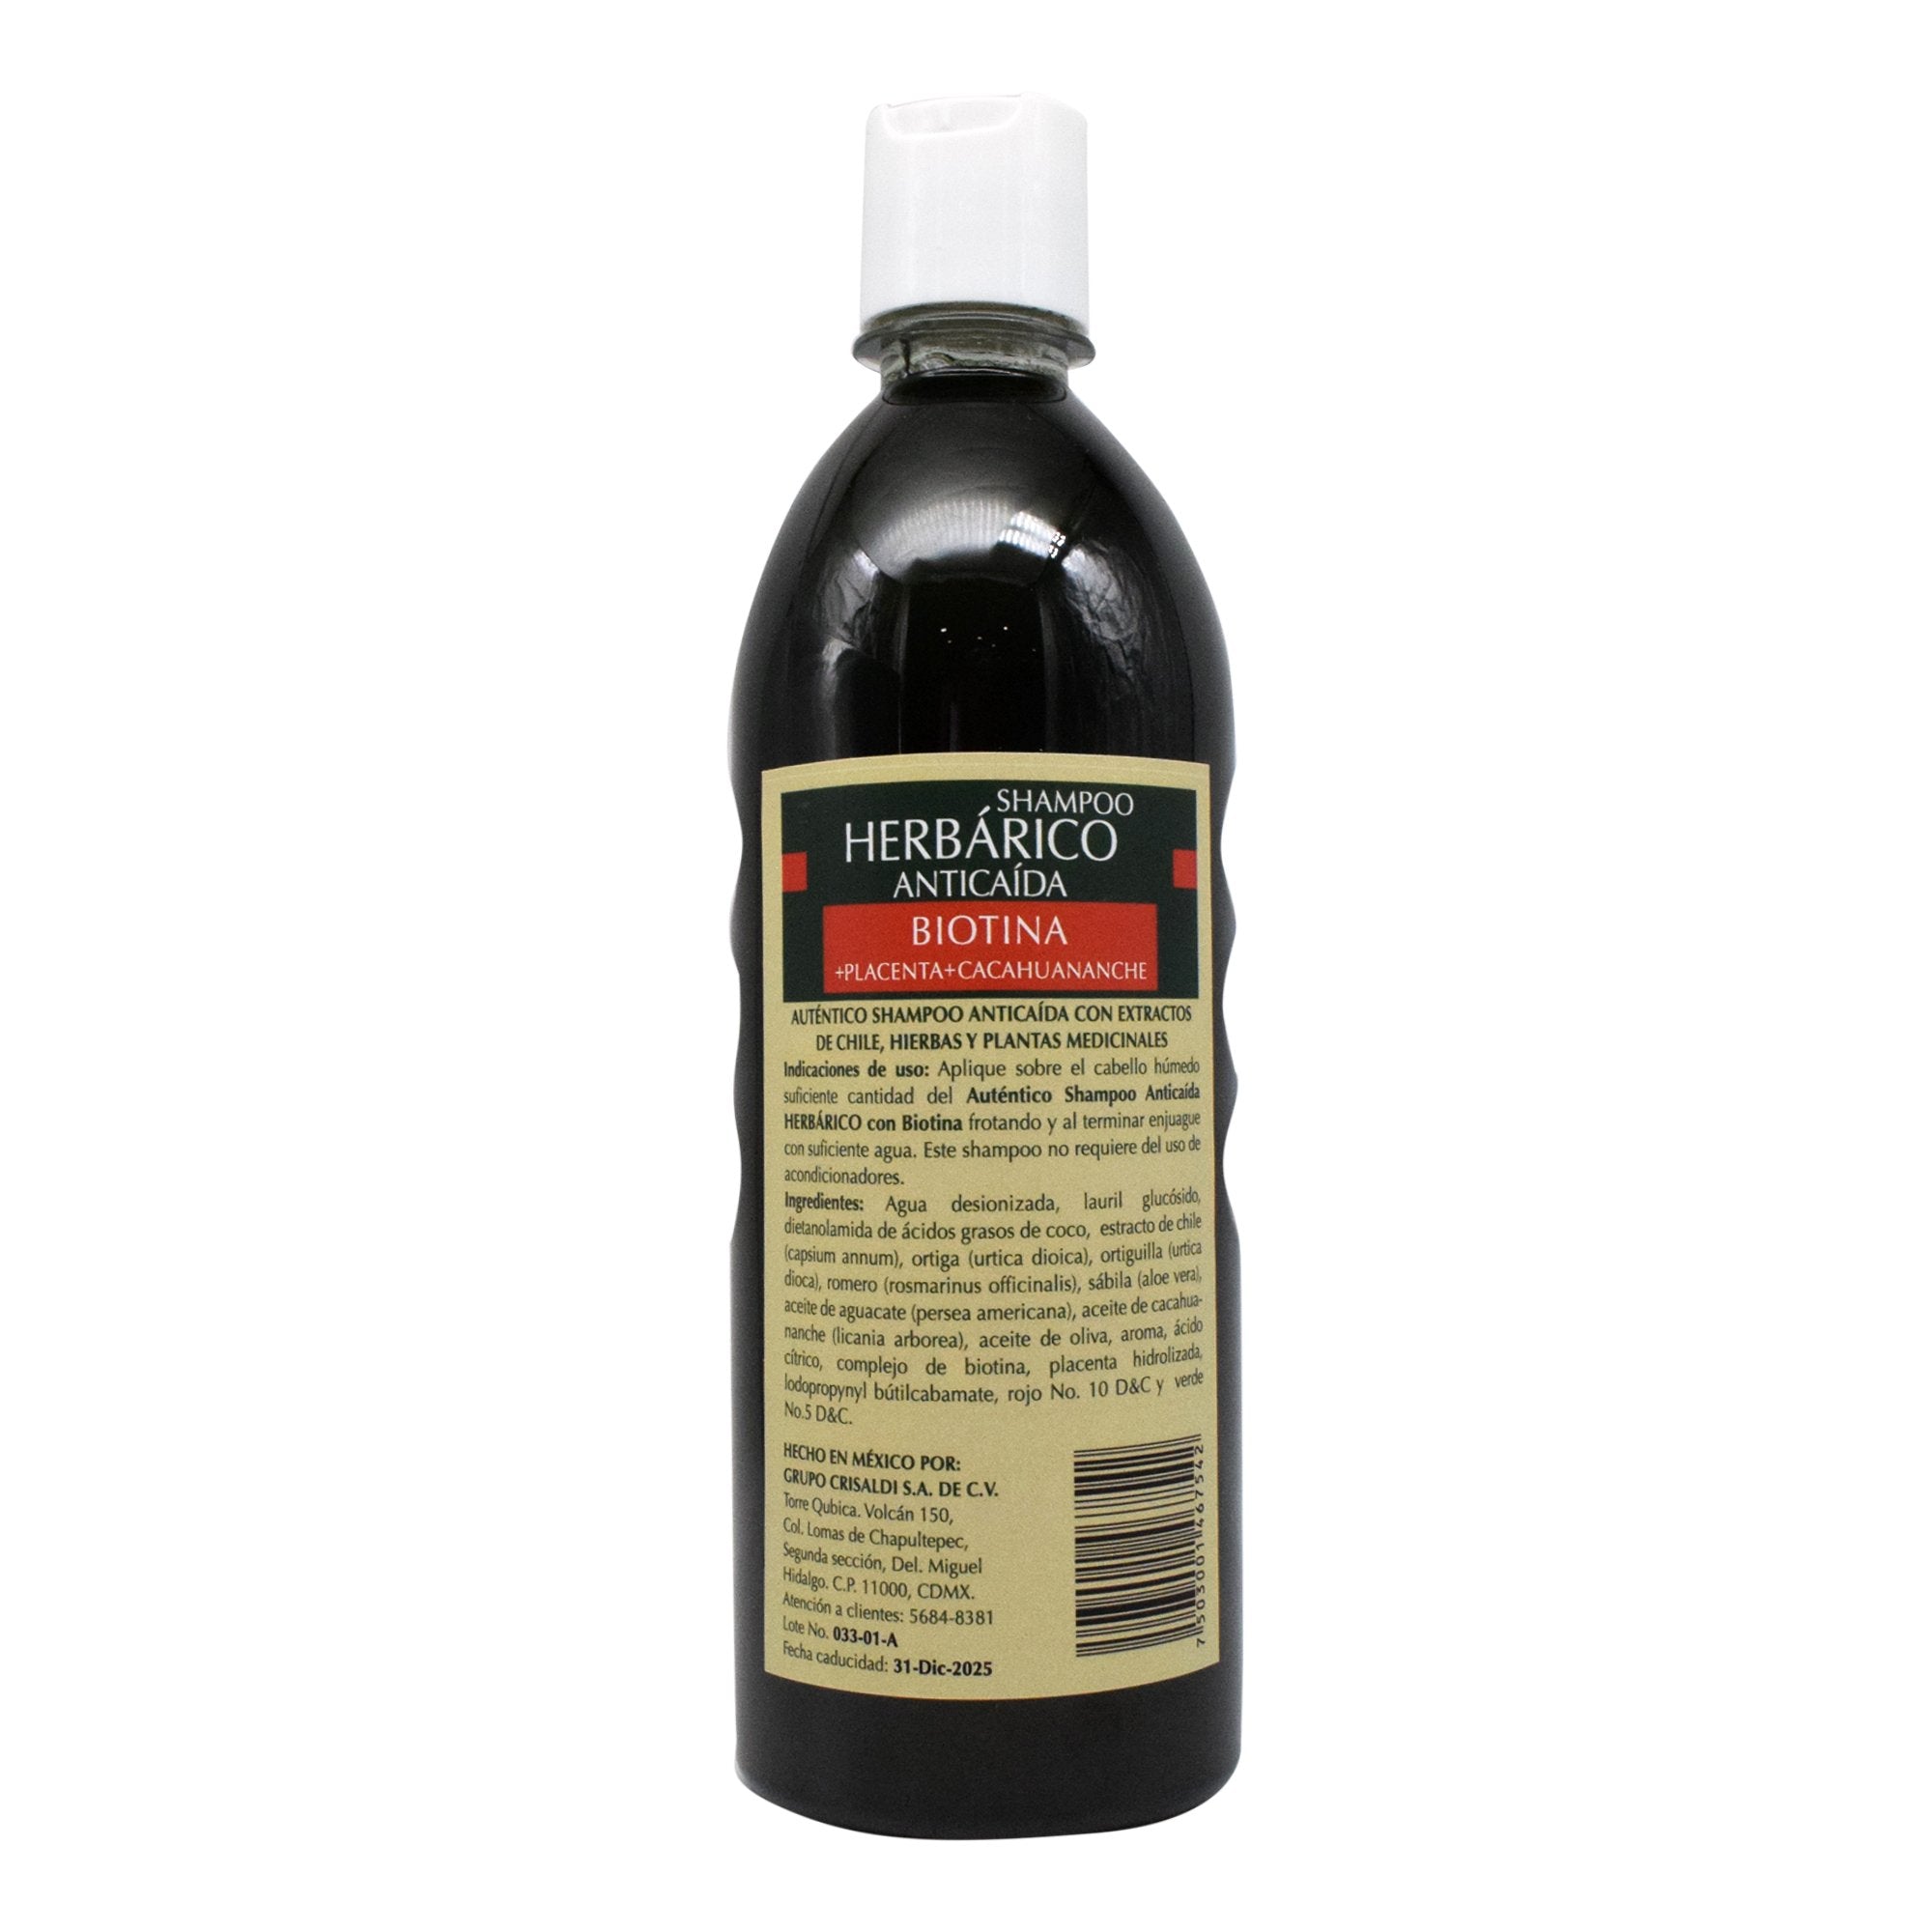 Shampoo anticaida con biotina 600 ml